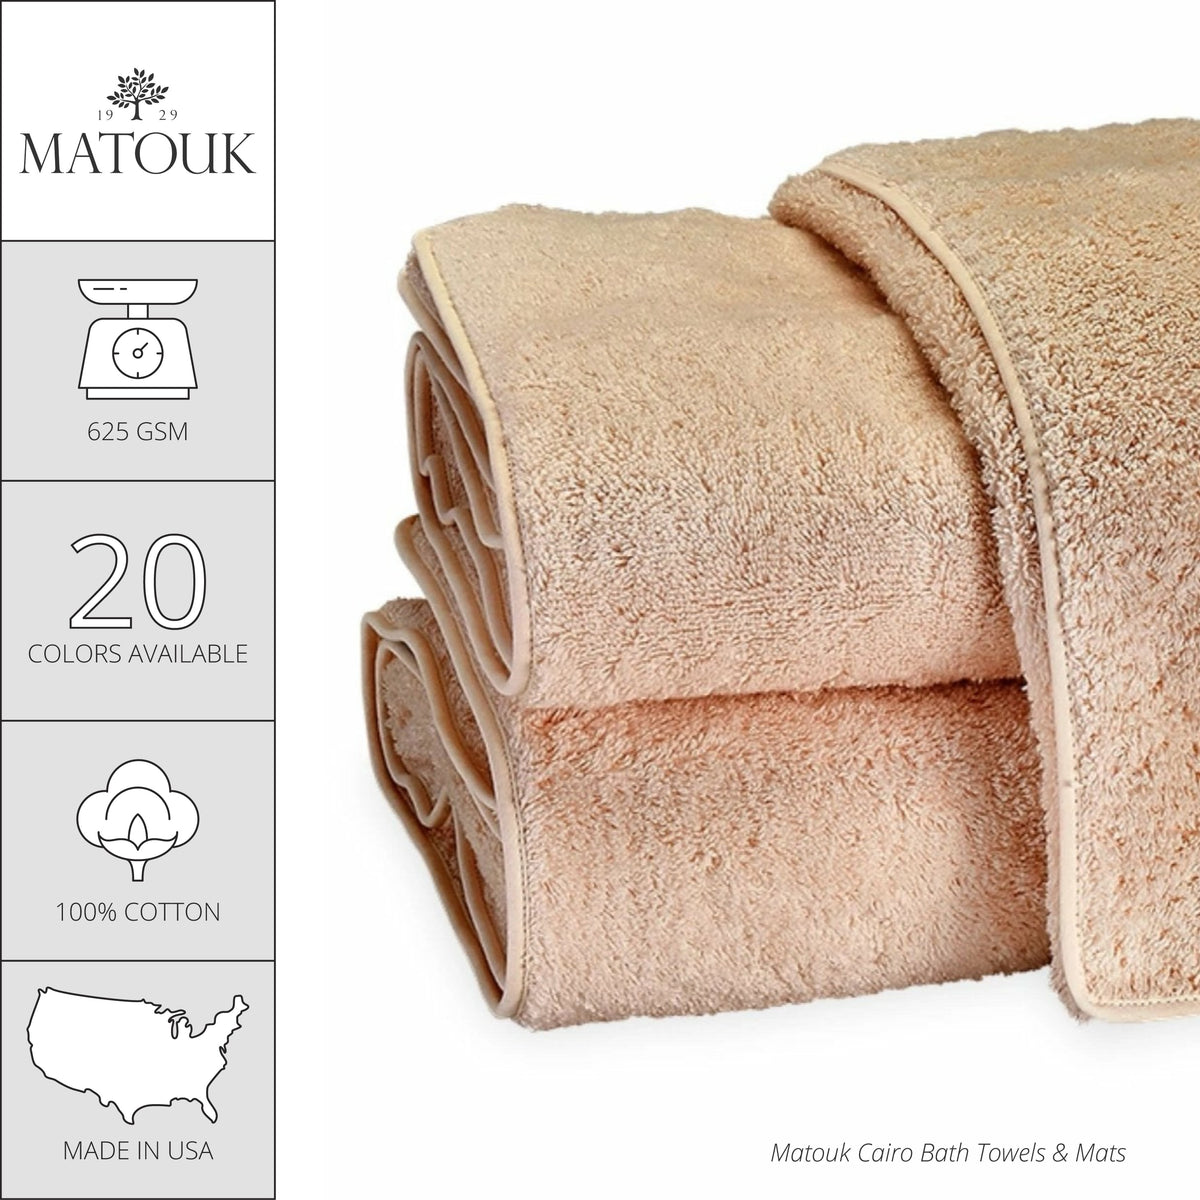 Matouk Cairo Bath Towels and Mats - Pearl/Pearl